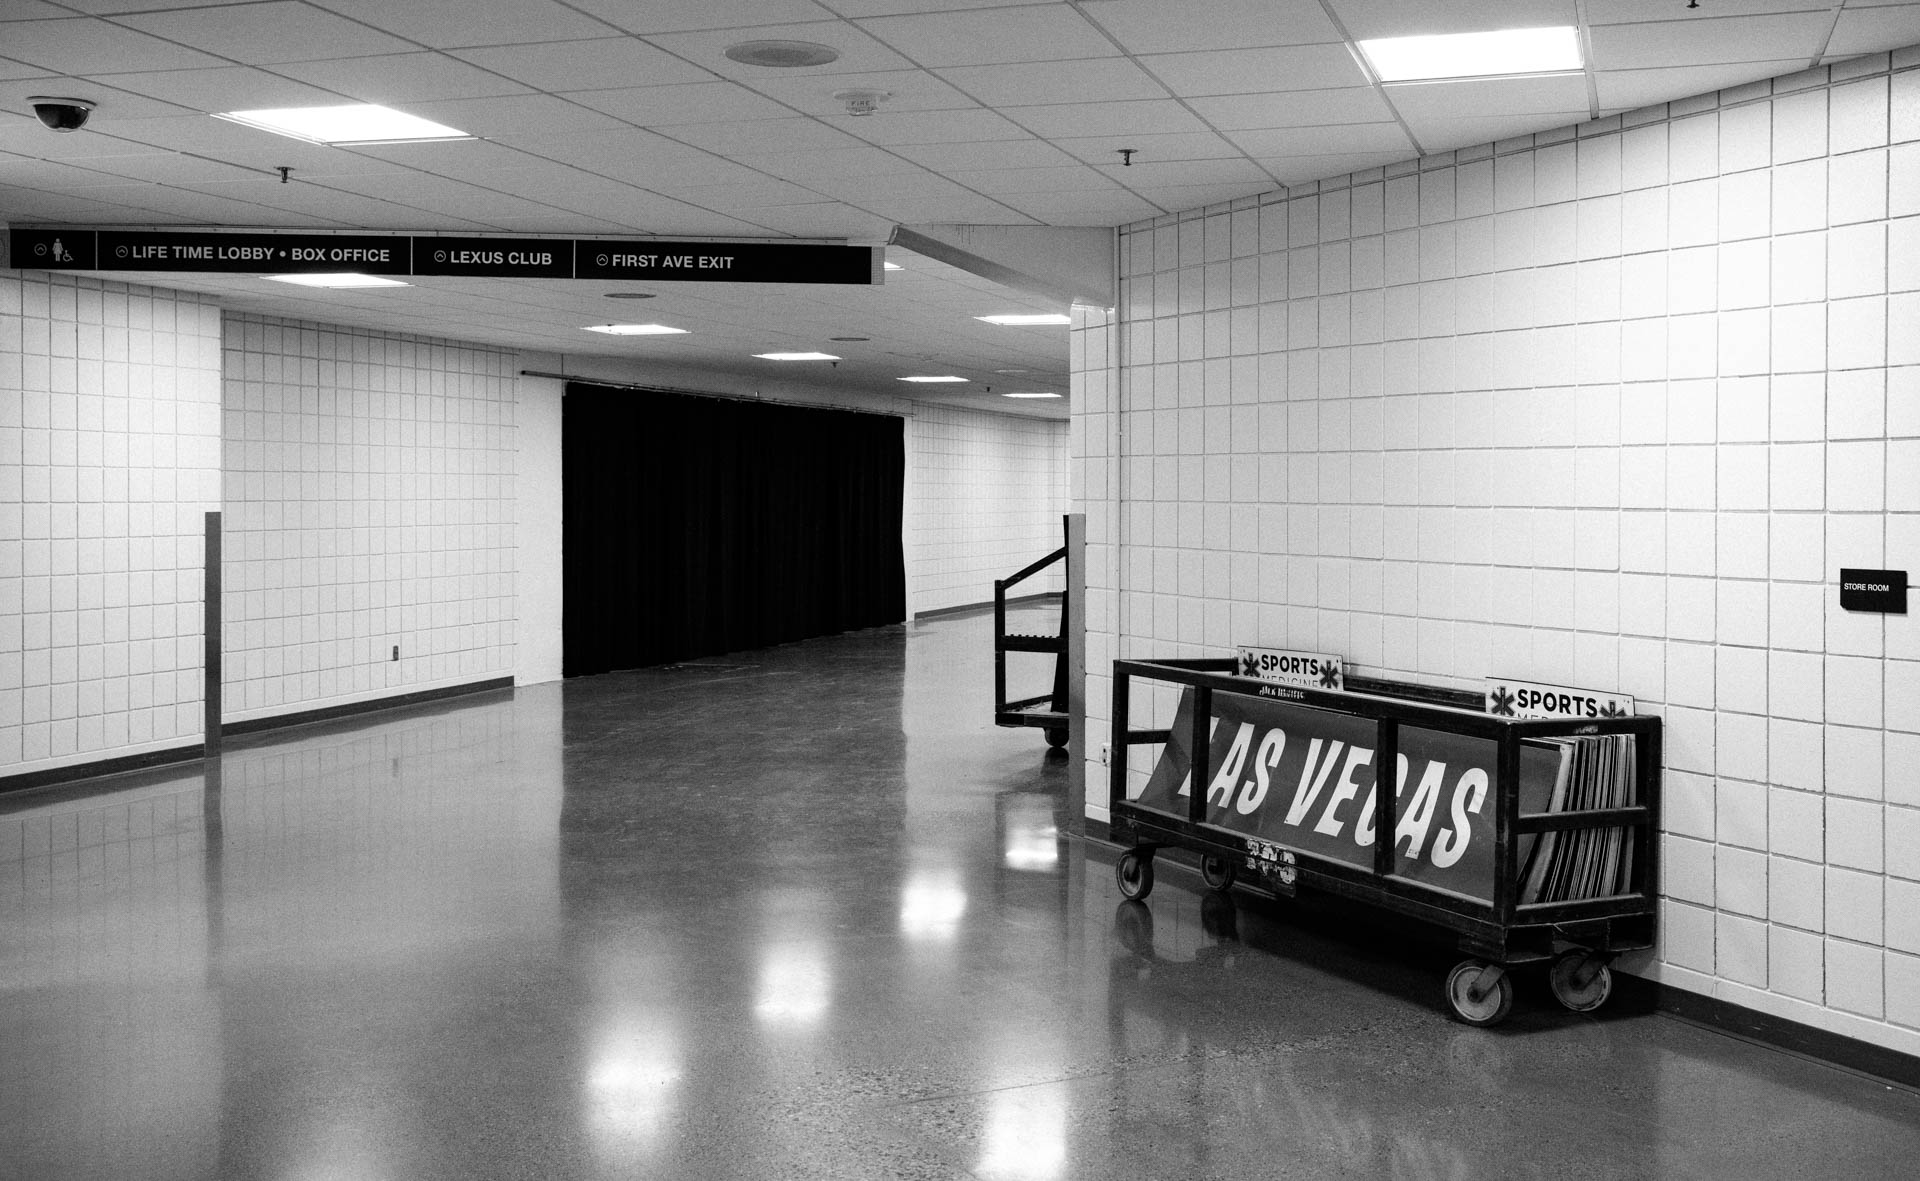 pbr-las-vegas-sign-empty-hallway.JPG